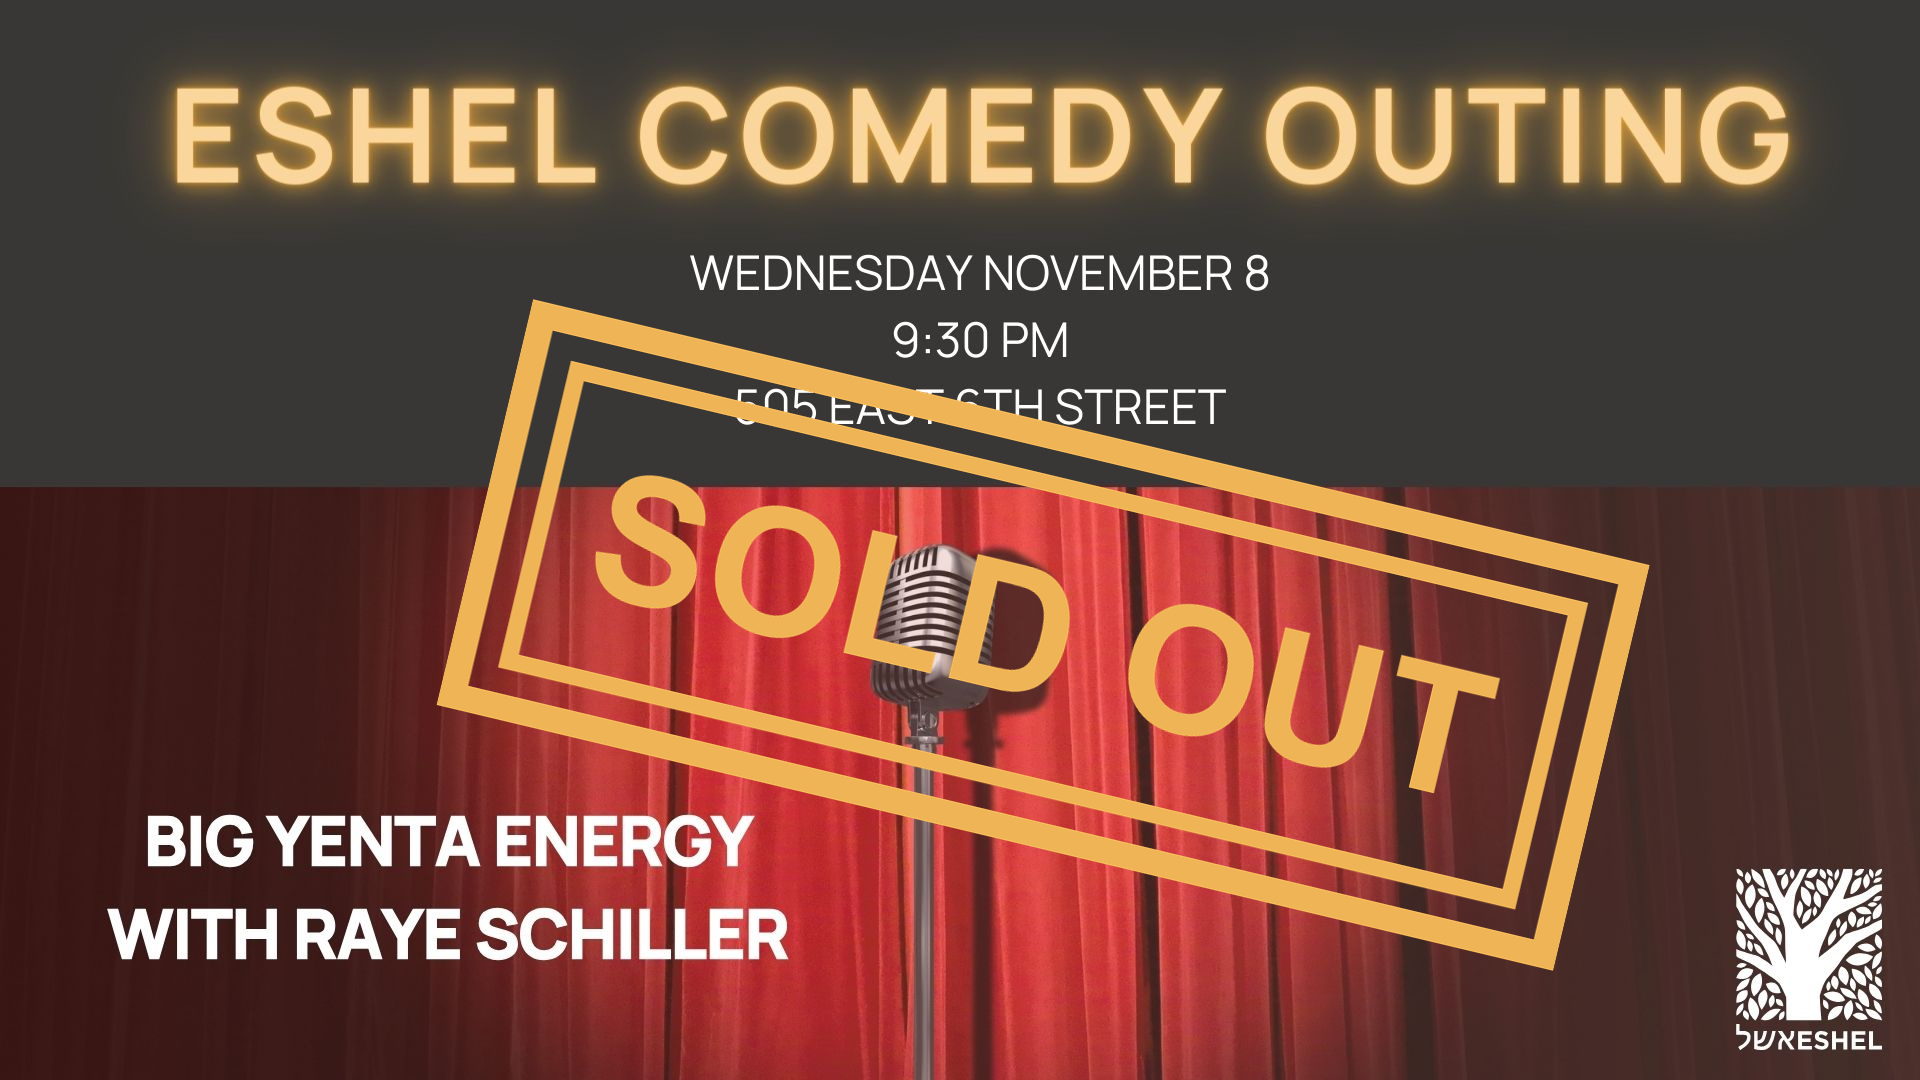 Eshel Comedy Outing | Wednesday, November 8, 9:30 pm, 505 East 6th Street